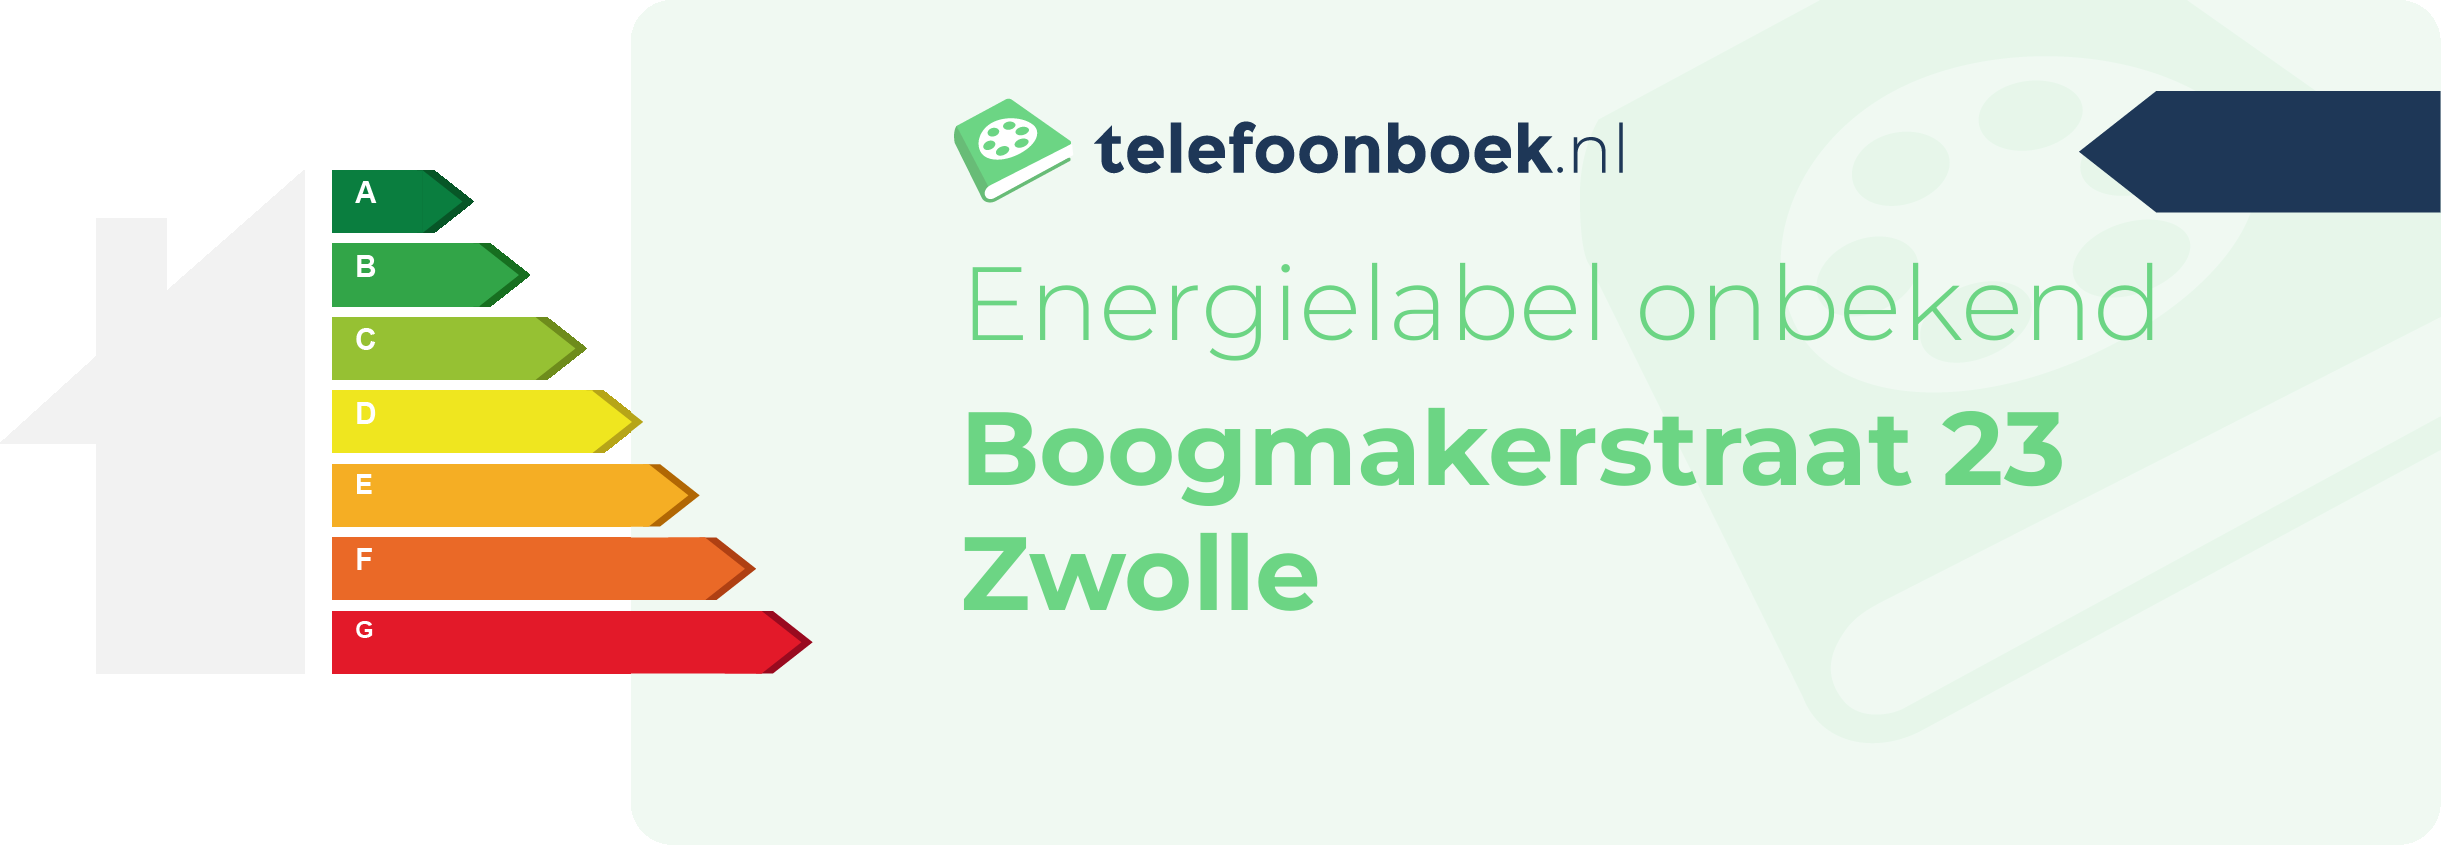 Energielabel Boogmakerstraat 23 Zwolle